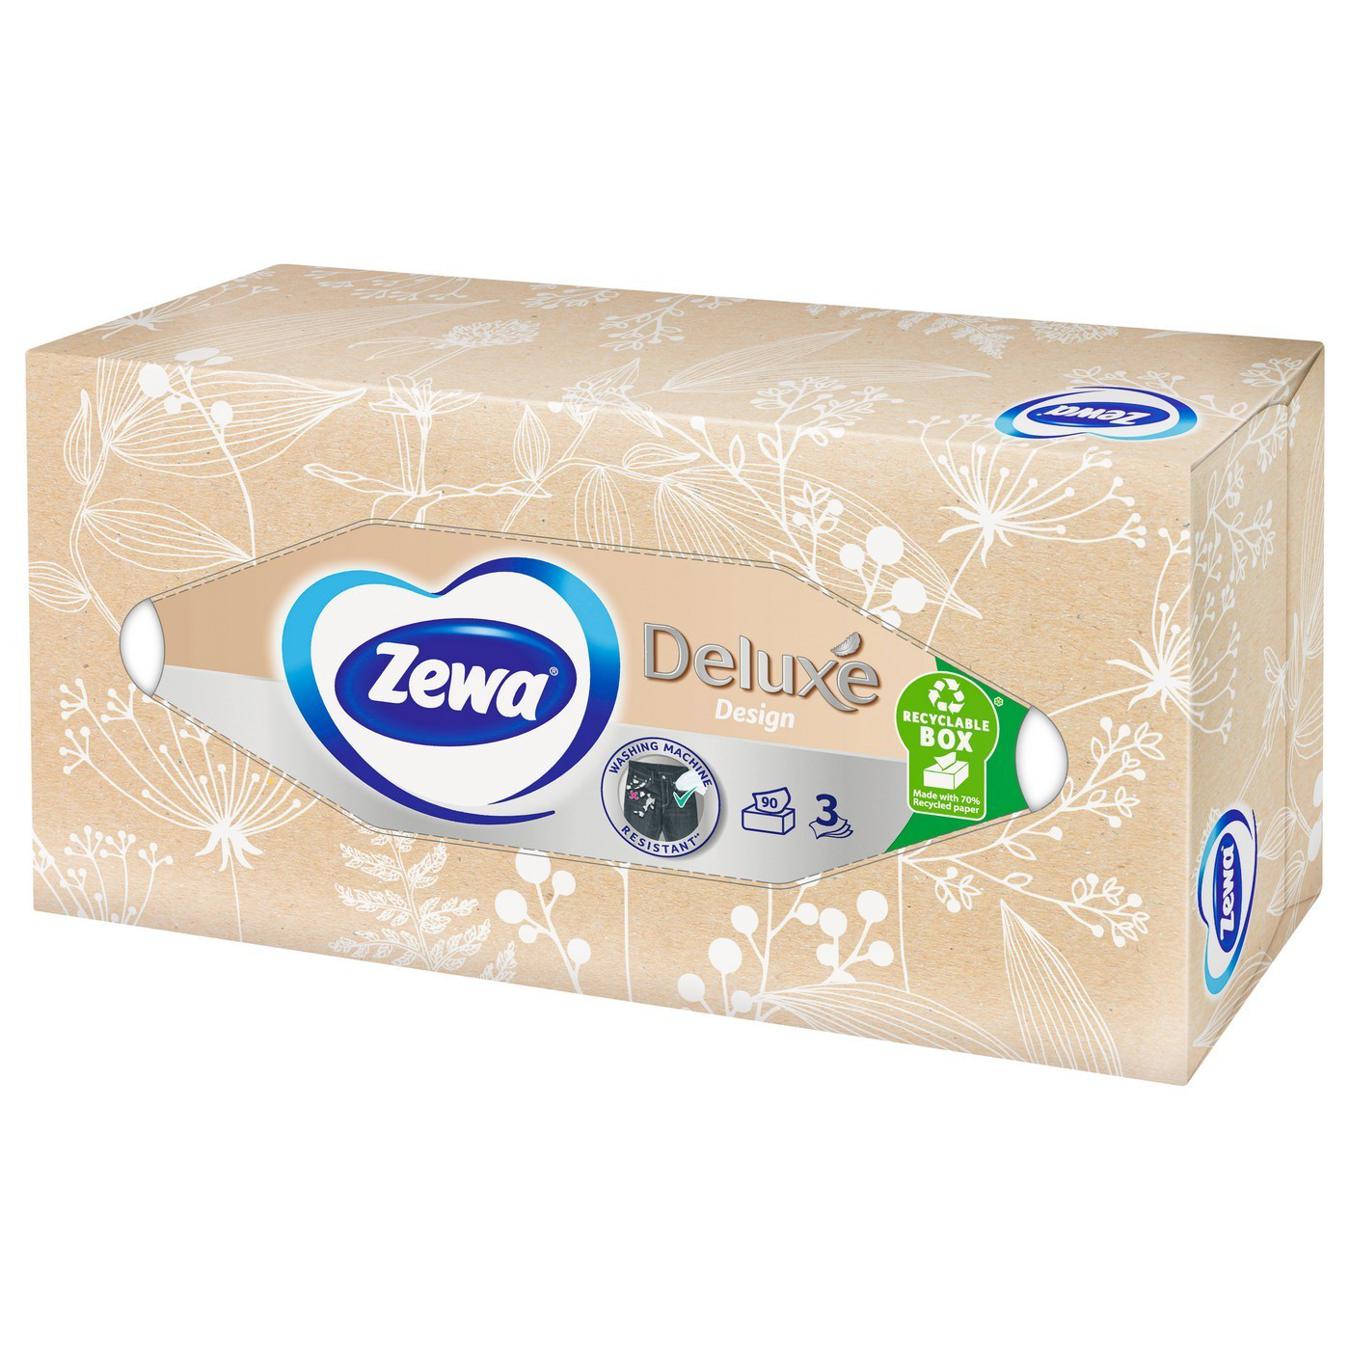 Zewa Deluxe Three-Ply Paper Tissues 90pcs 4